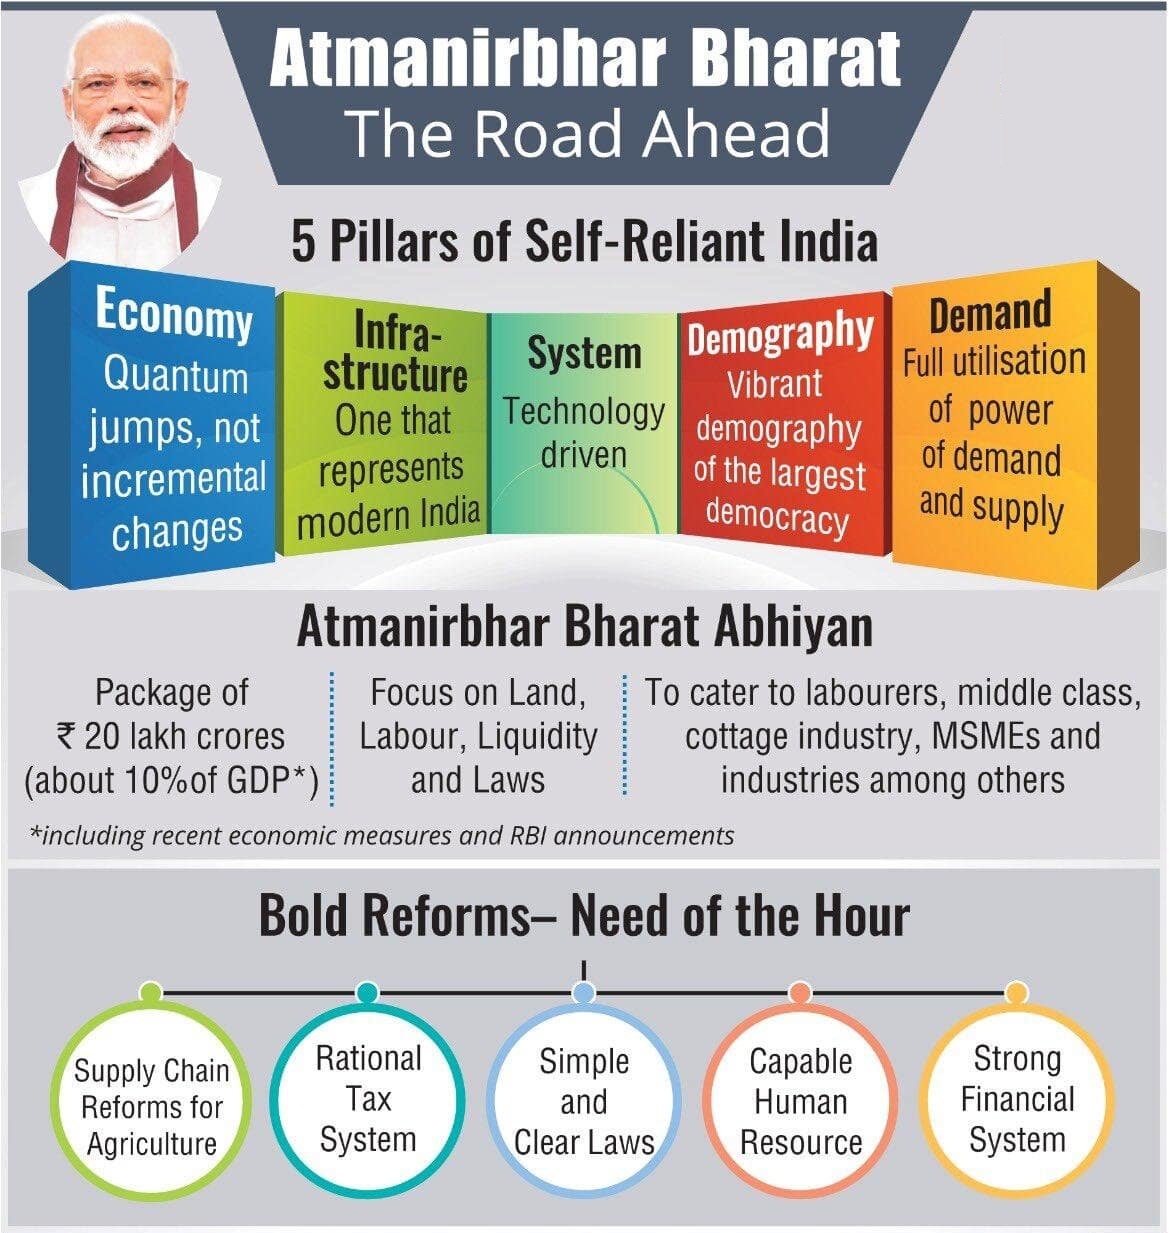 Atmanirbhar Bharat Abhiyan Package